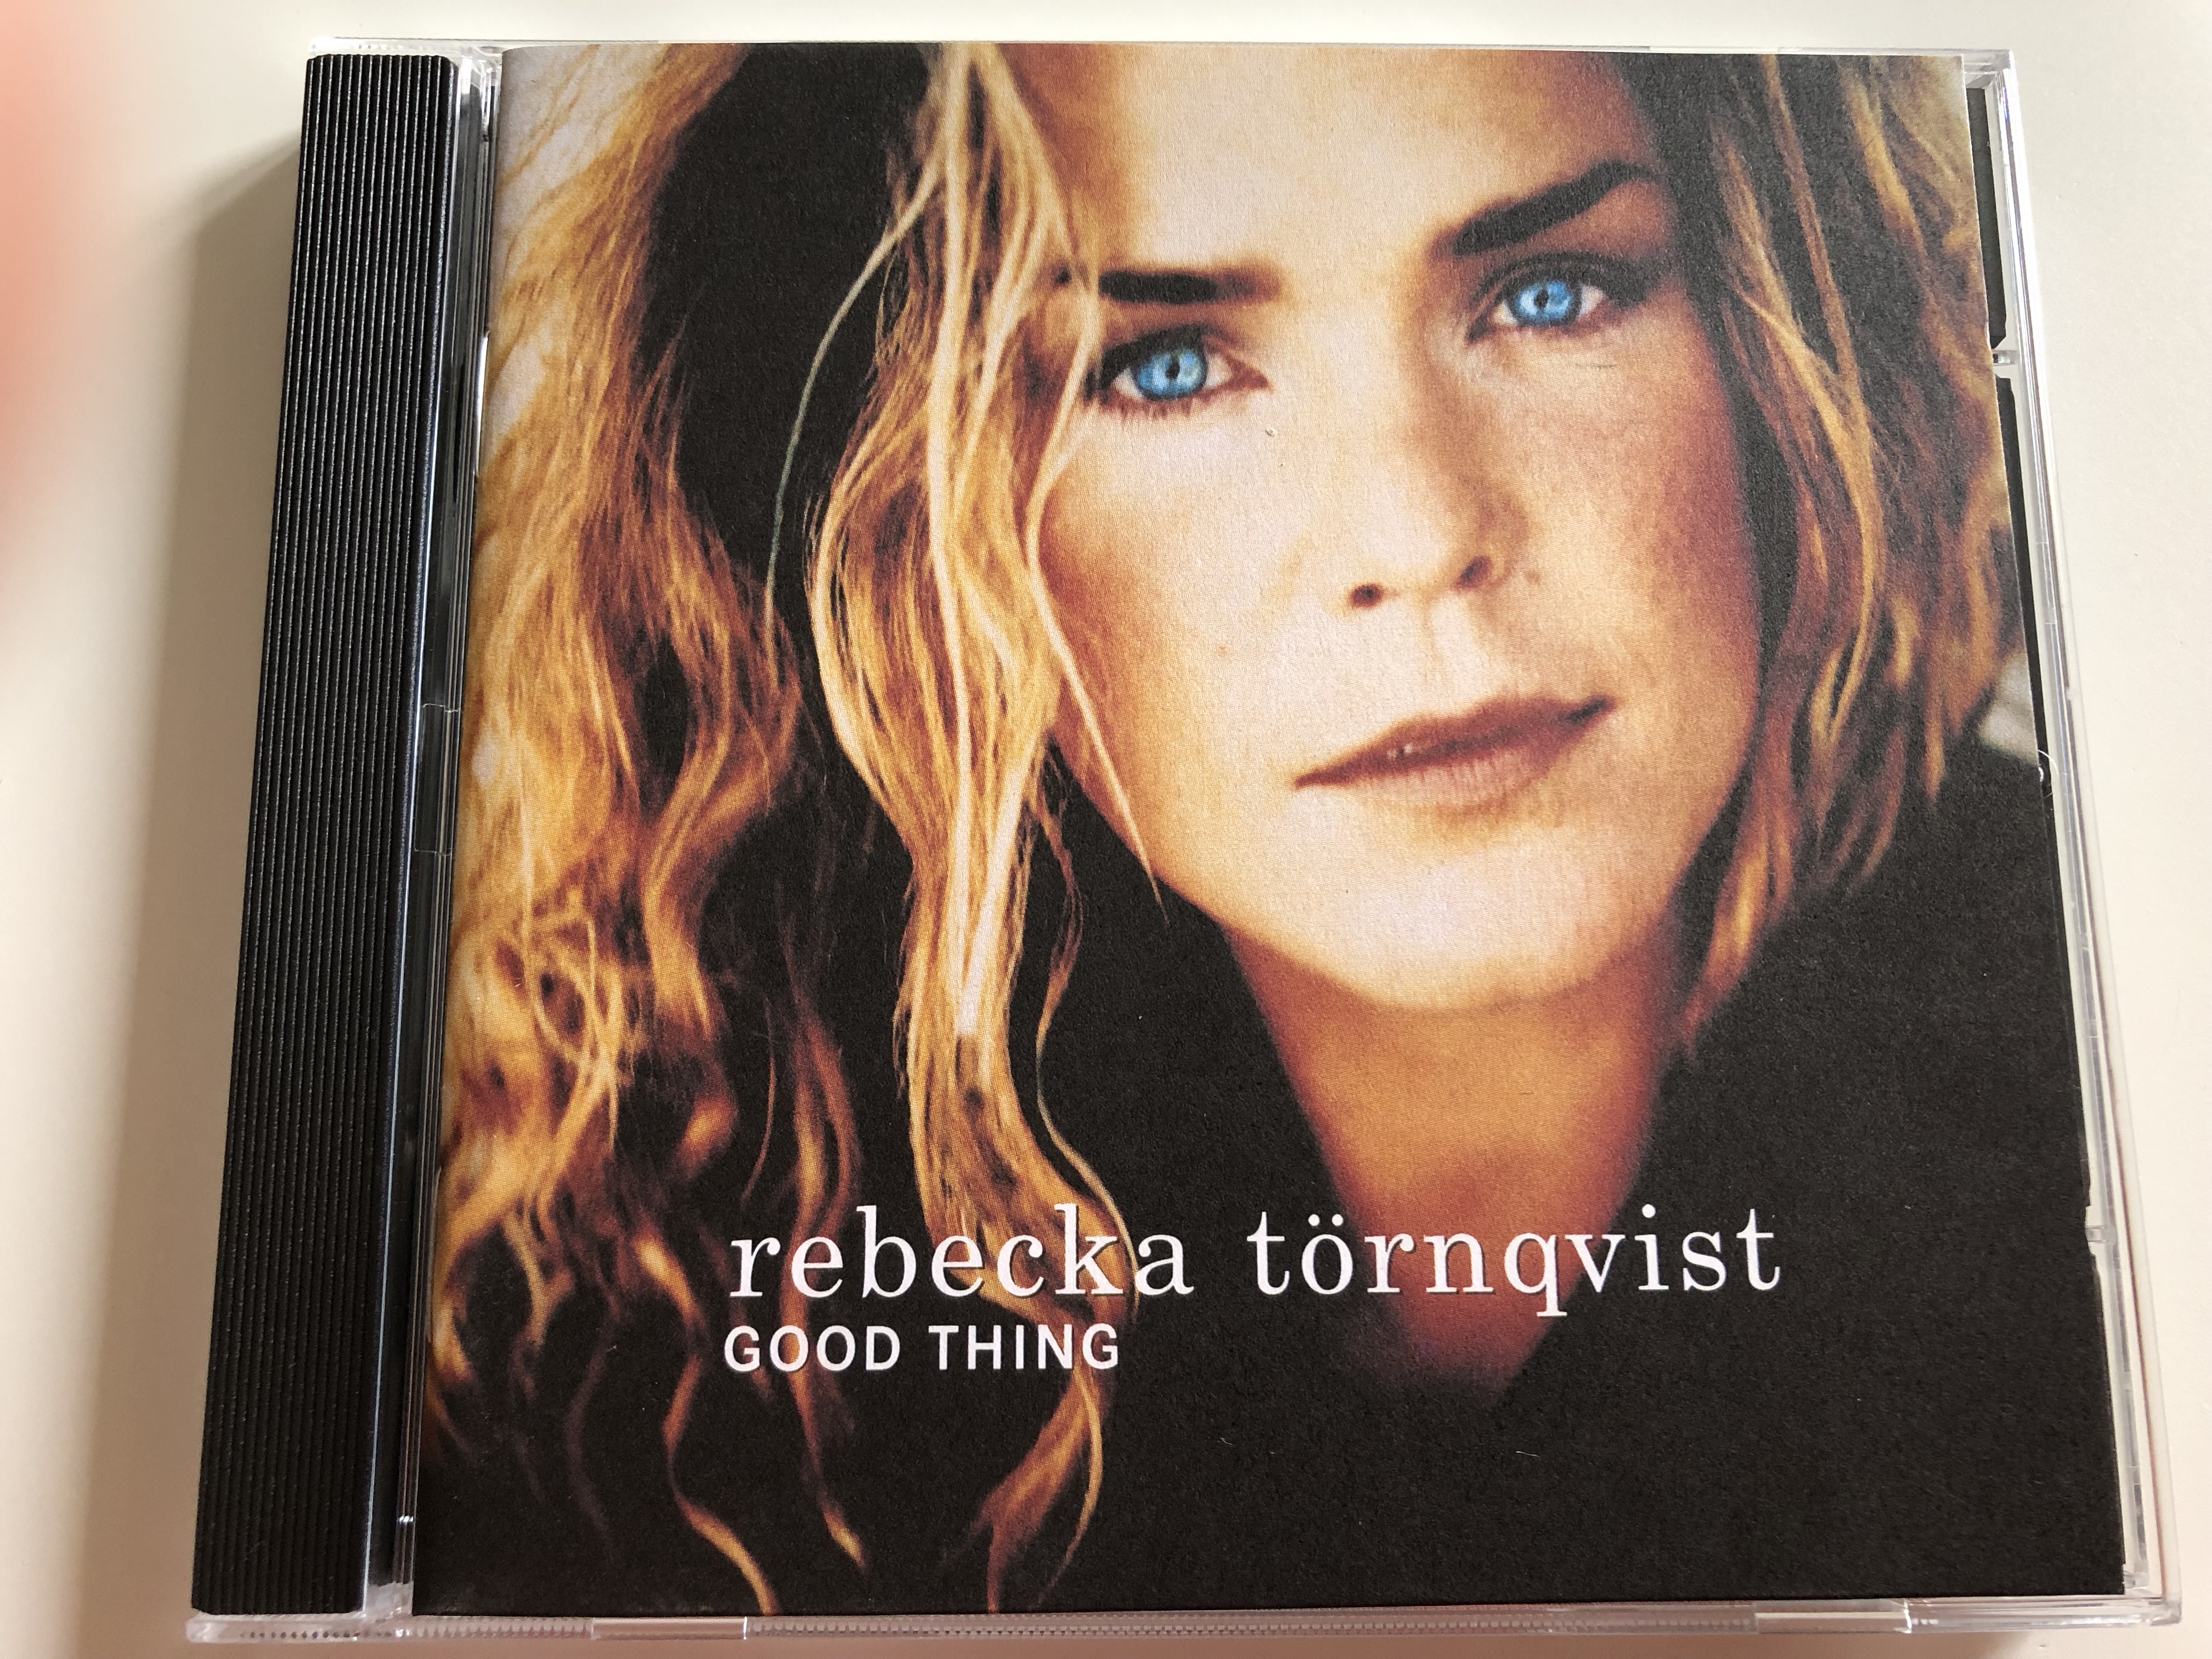 rebecka-t-rnqvist-good-thing-emi-audio-cd-1995-stereo-724383541720-1-.jpg